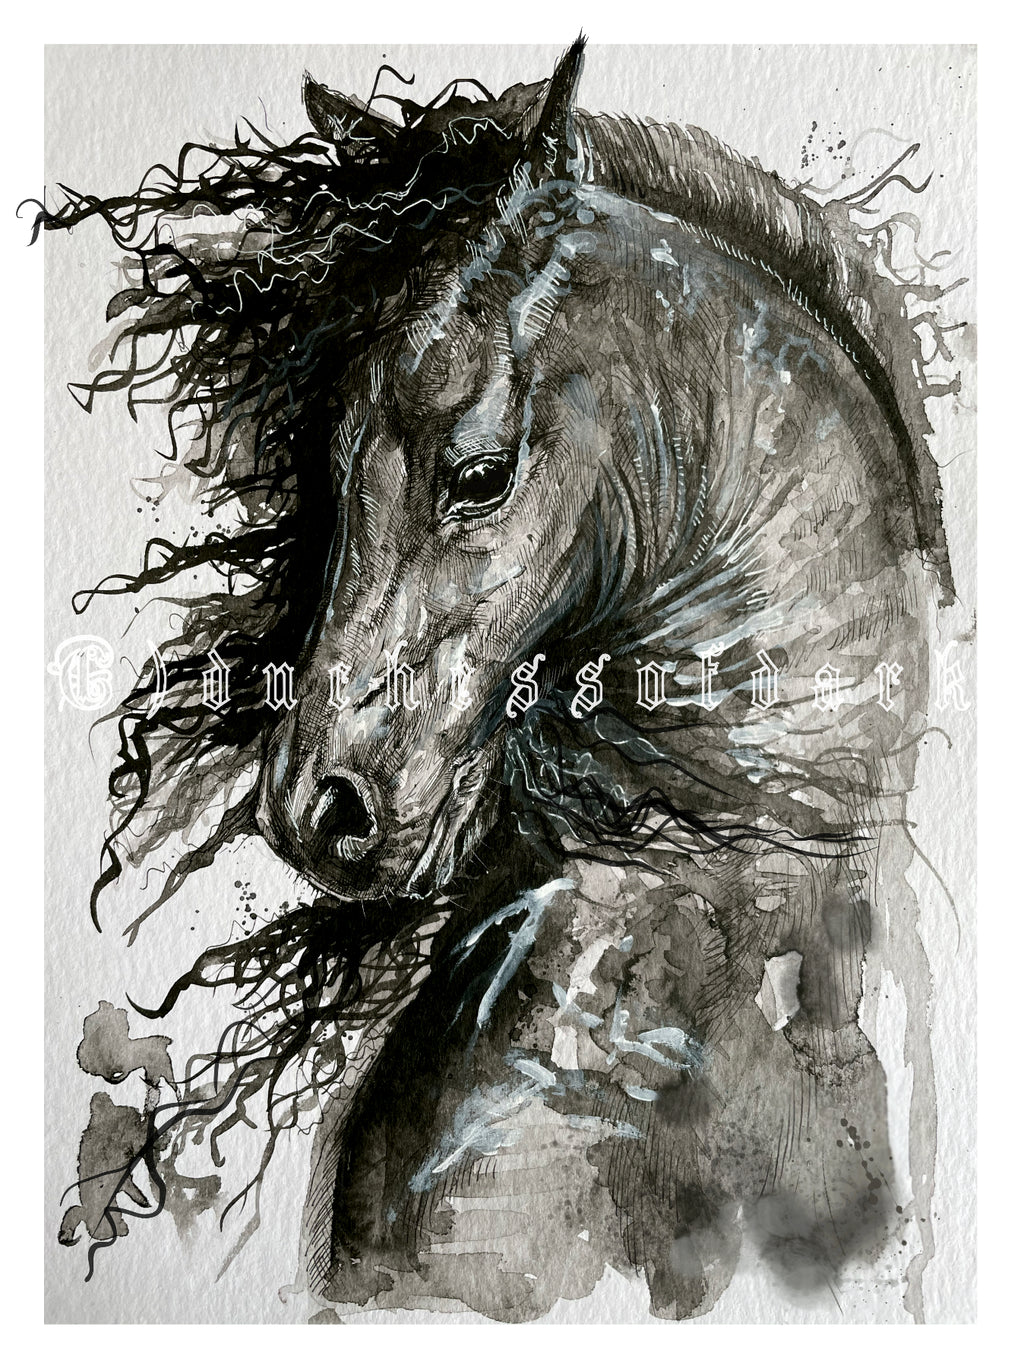 Friesian Beauty Horse Equine Fine Art Giclee Print Postcard A6/ A5/ A4 - gothic animal dark art